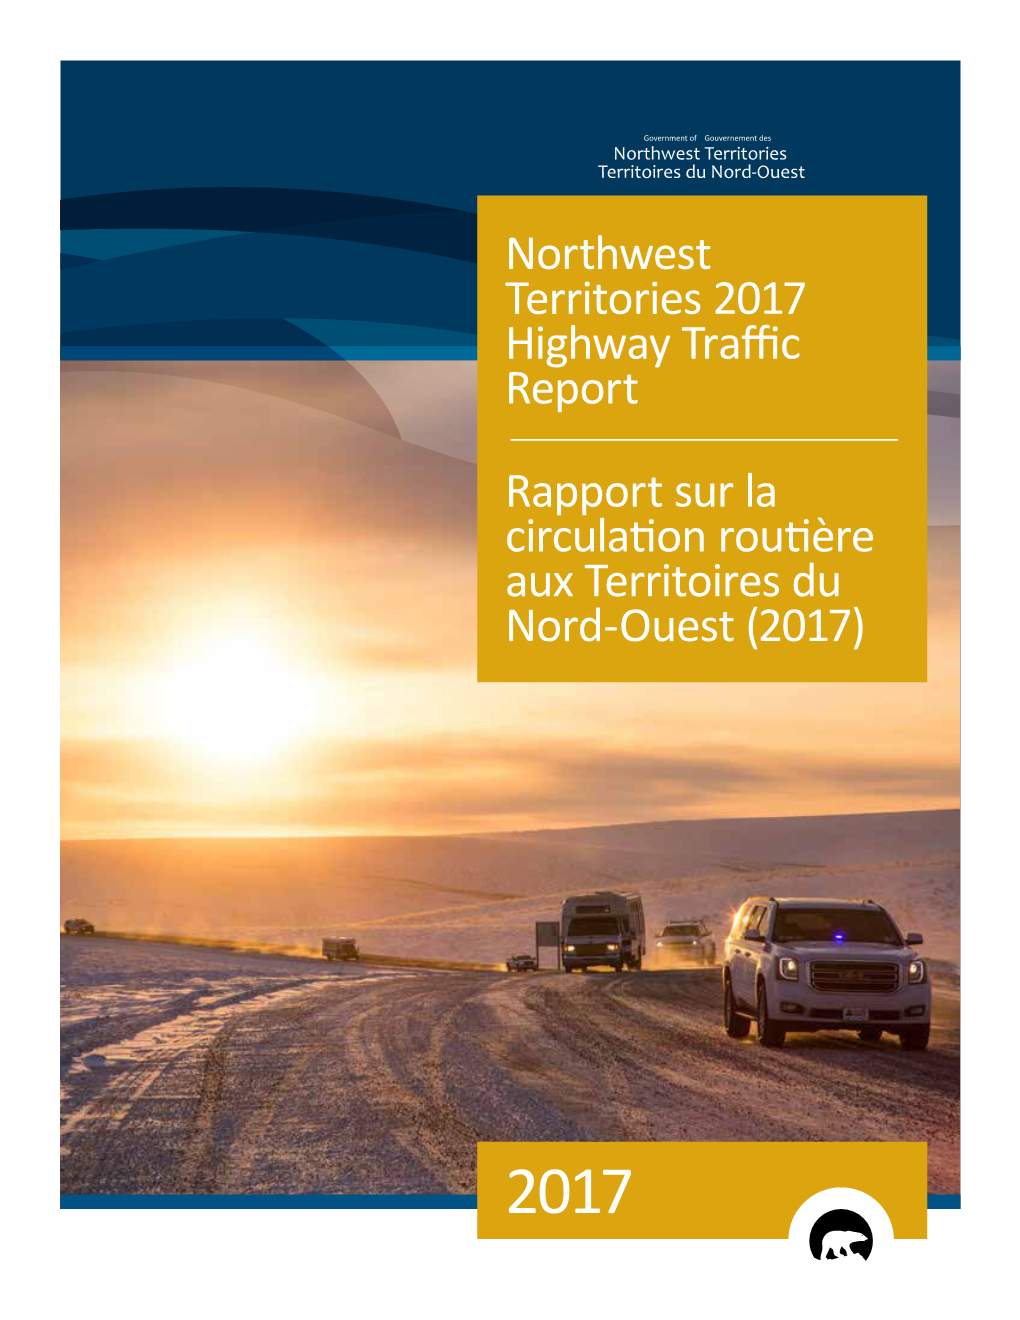 2017 Highway Traffic Report